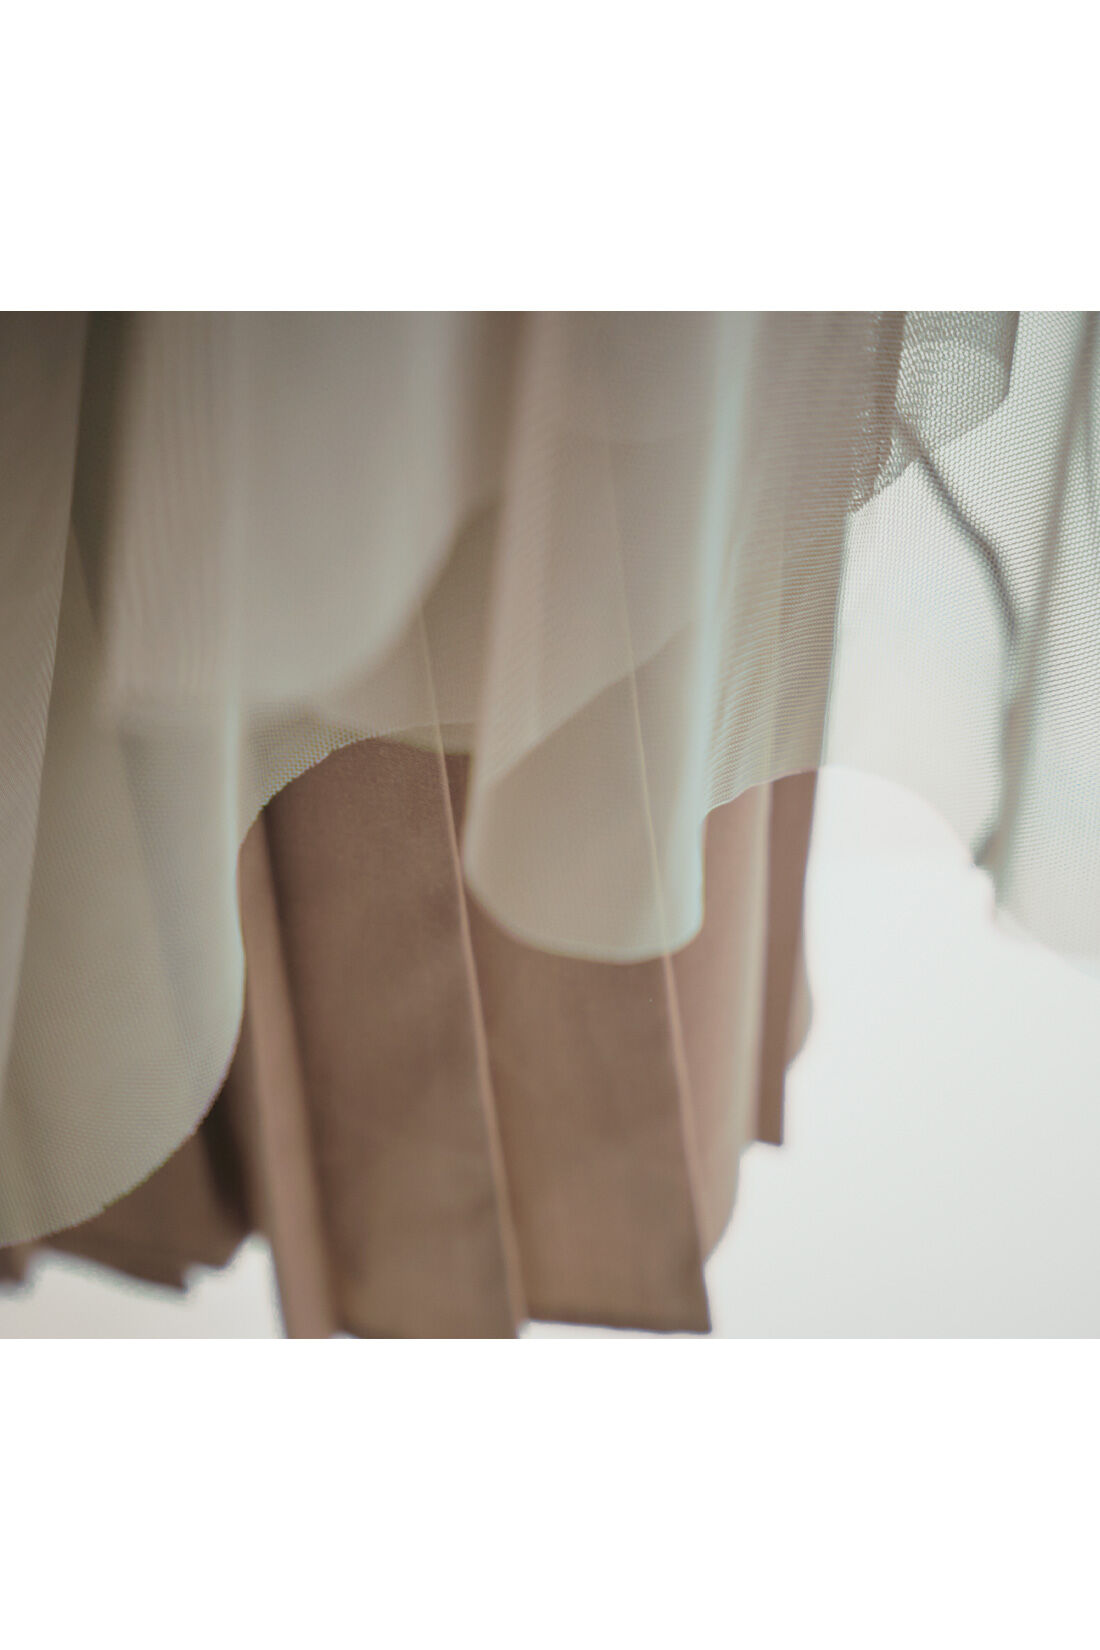 DRECO by IEDIT|【3～10日でお届け】IEDIT[イディット]　プリーツデザインのチュールレイヤードスカート〈モカグレー〉|プリーツ生地の上に、チュールを重ねたこだわりのデザイン。